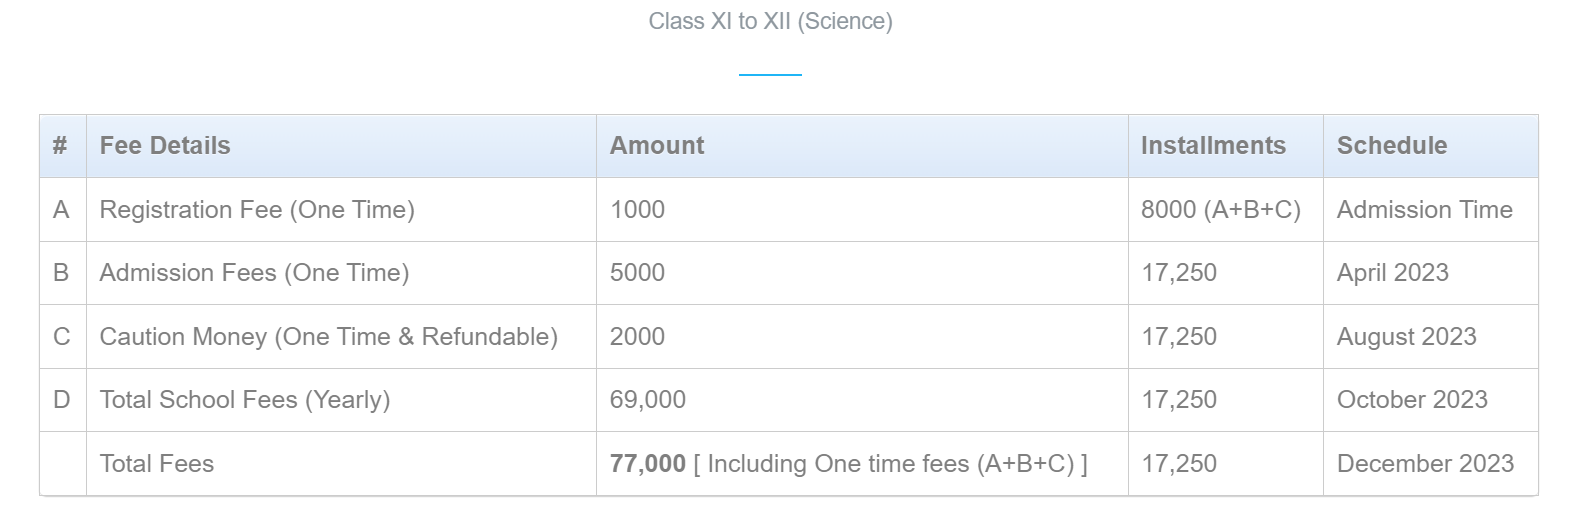 St. George’s School fee